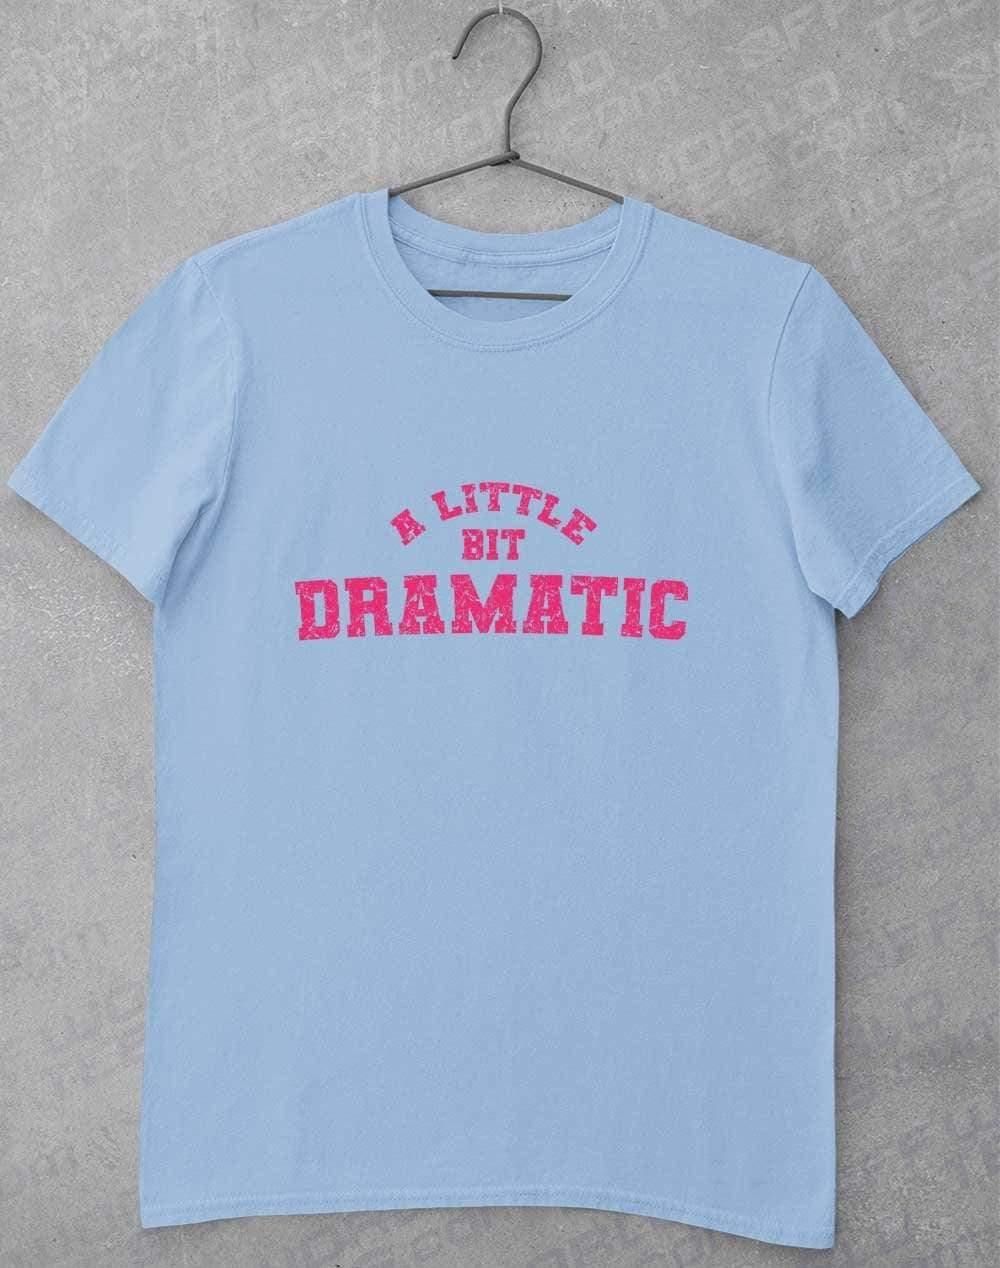 A Little Bit Dramatic Distressed T-Shirt S / Light Blue  - Off World Tees